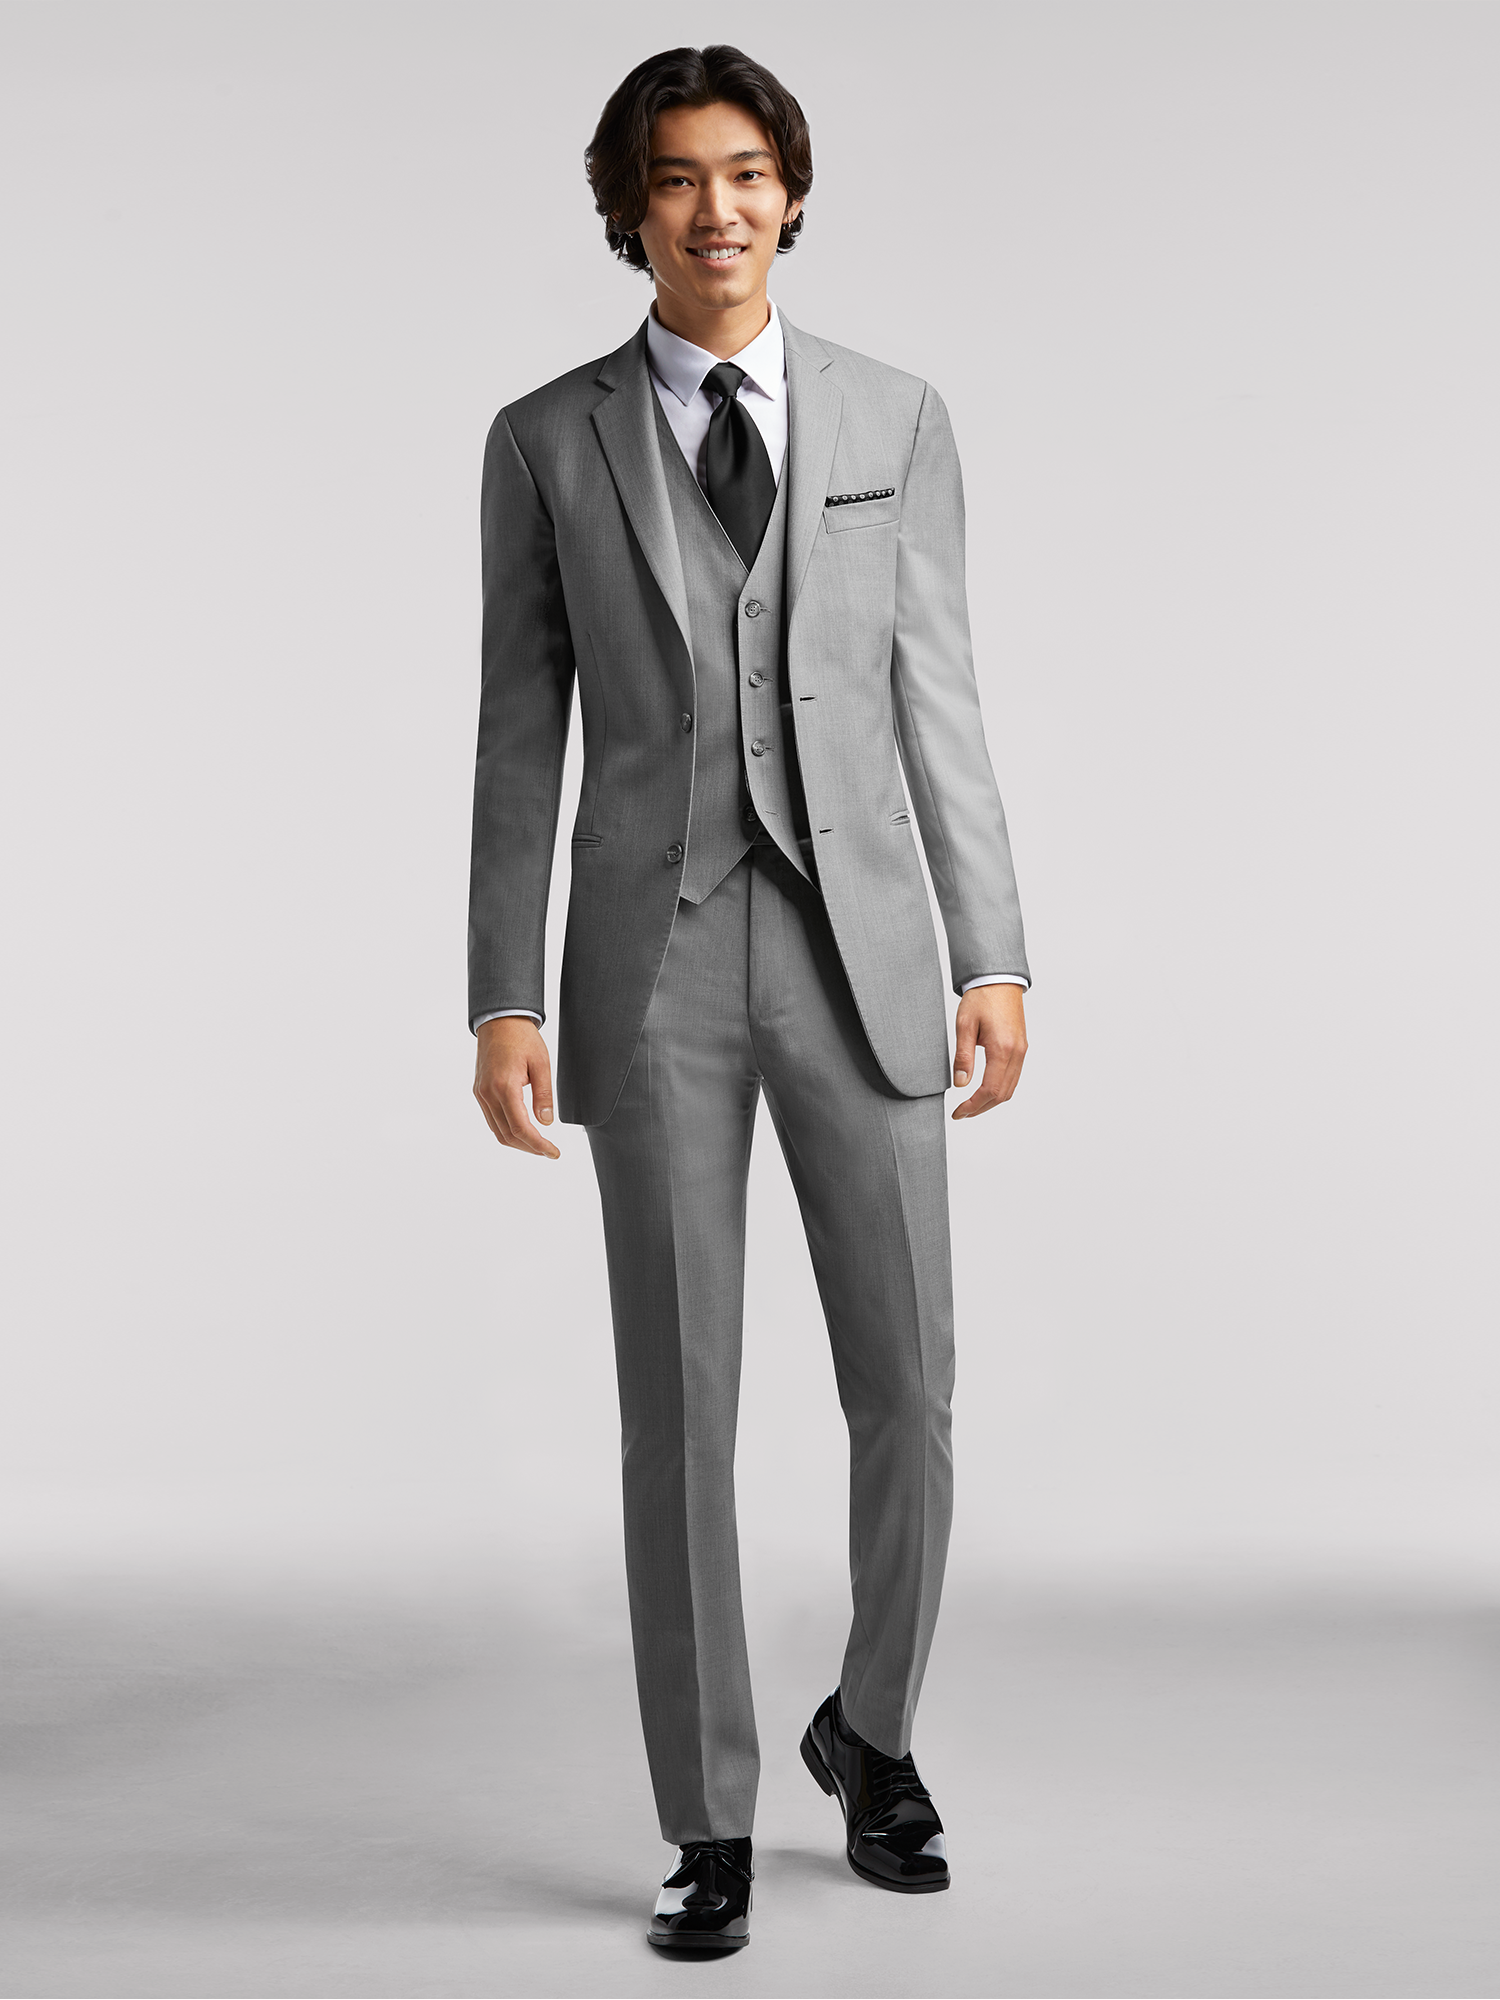 Textured Gray Groomsman Suit by SuitShop